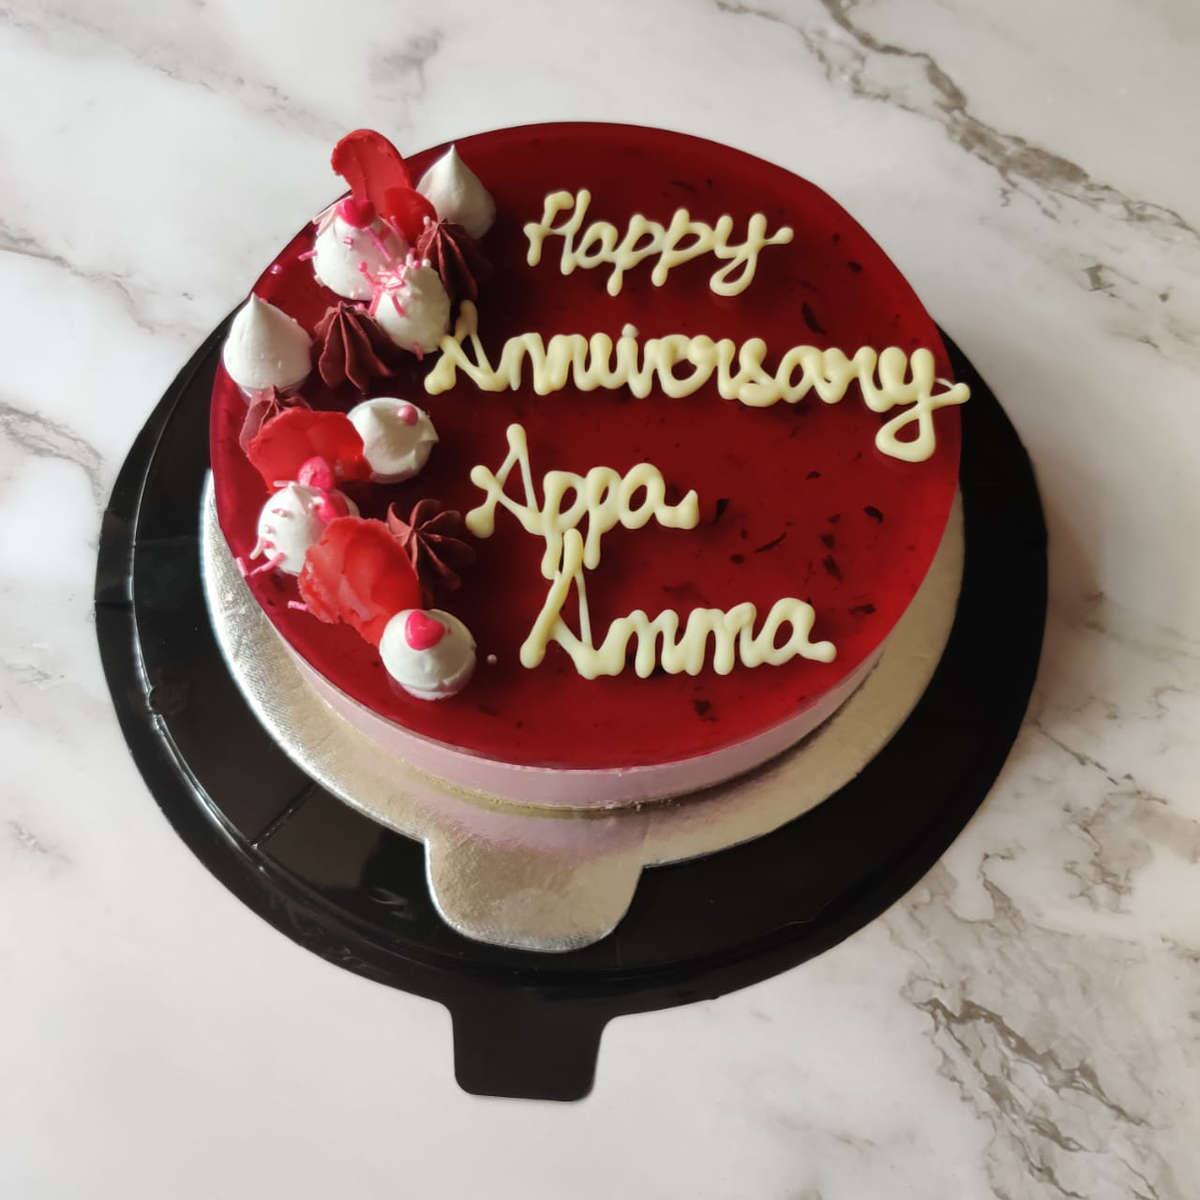 Happy 25th wedding anniversary Amma Nanna || CakeWAY.in Call : +919394422233